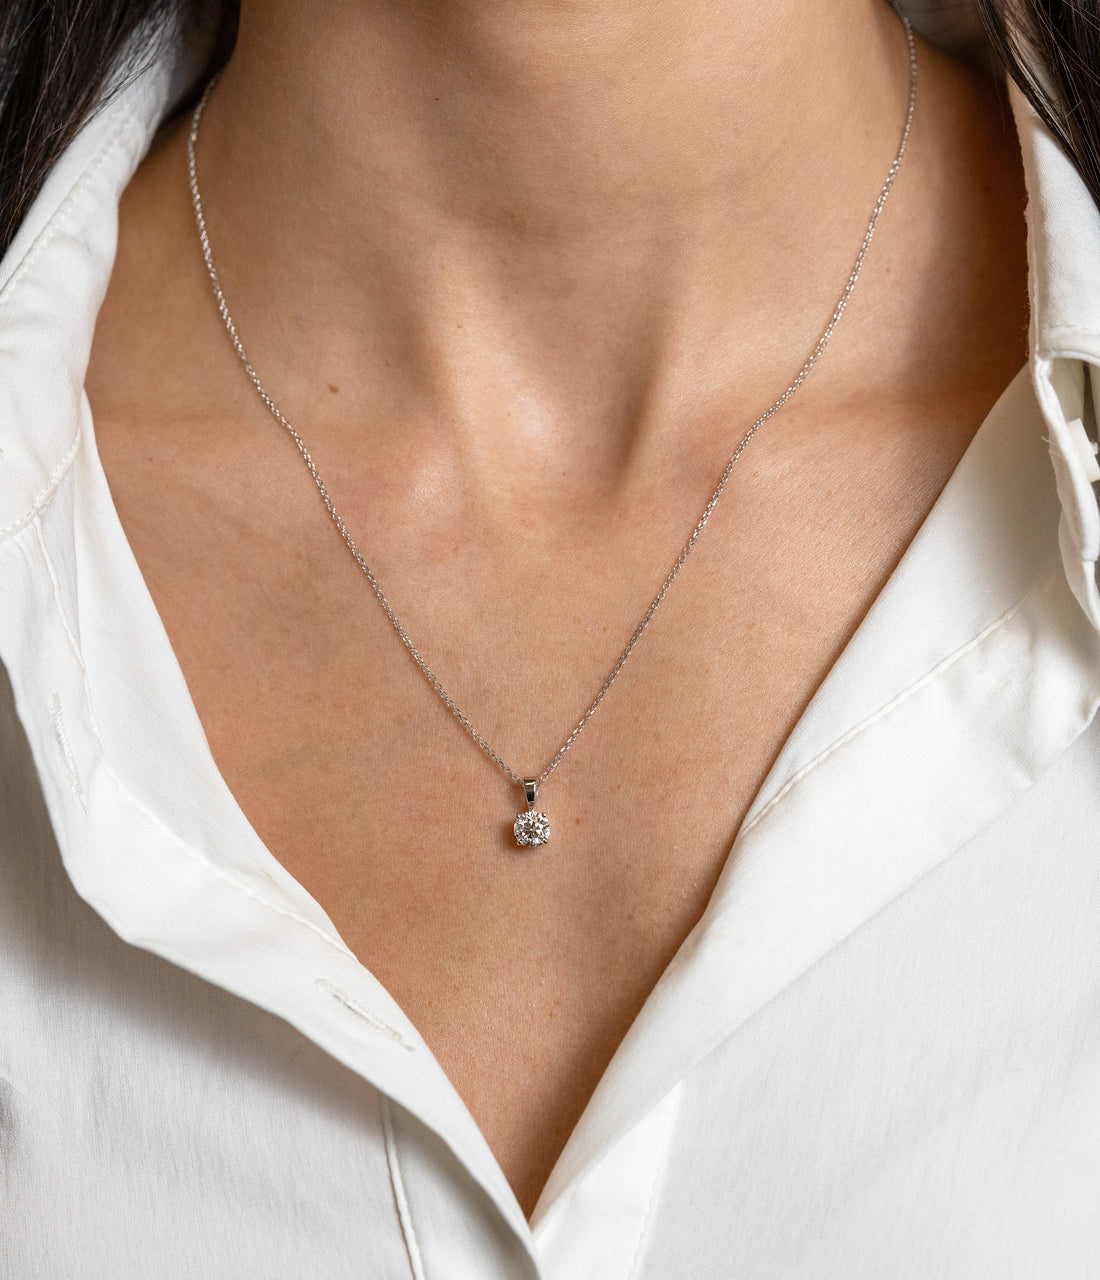 Solitaire Diamond Necklace Pendant in White Gold